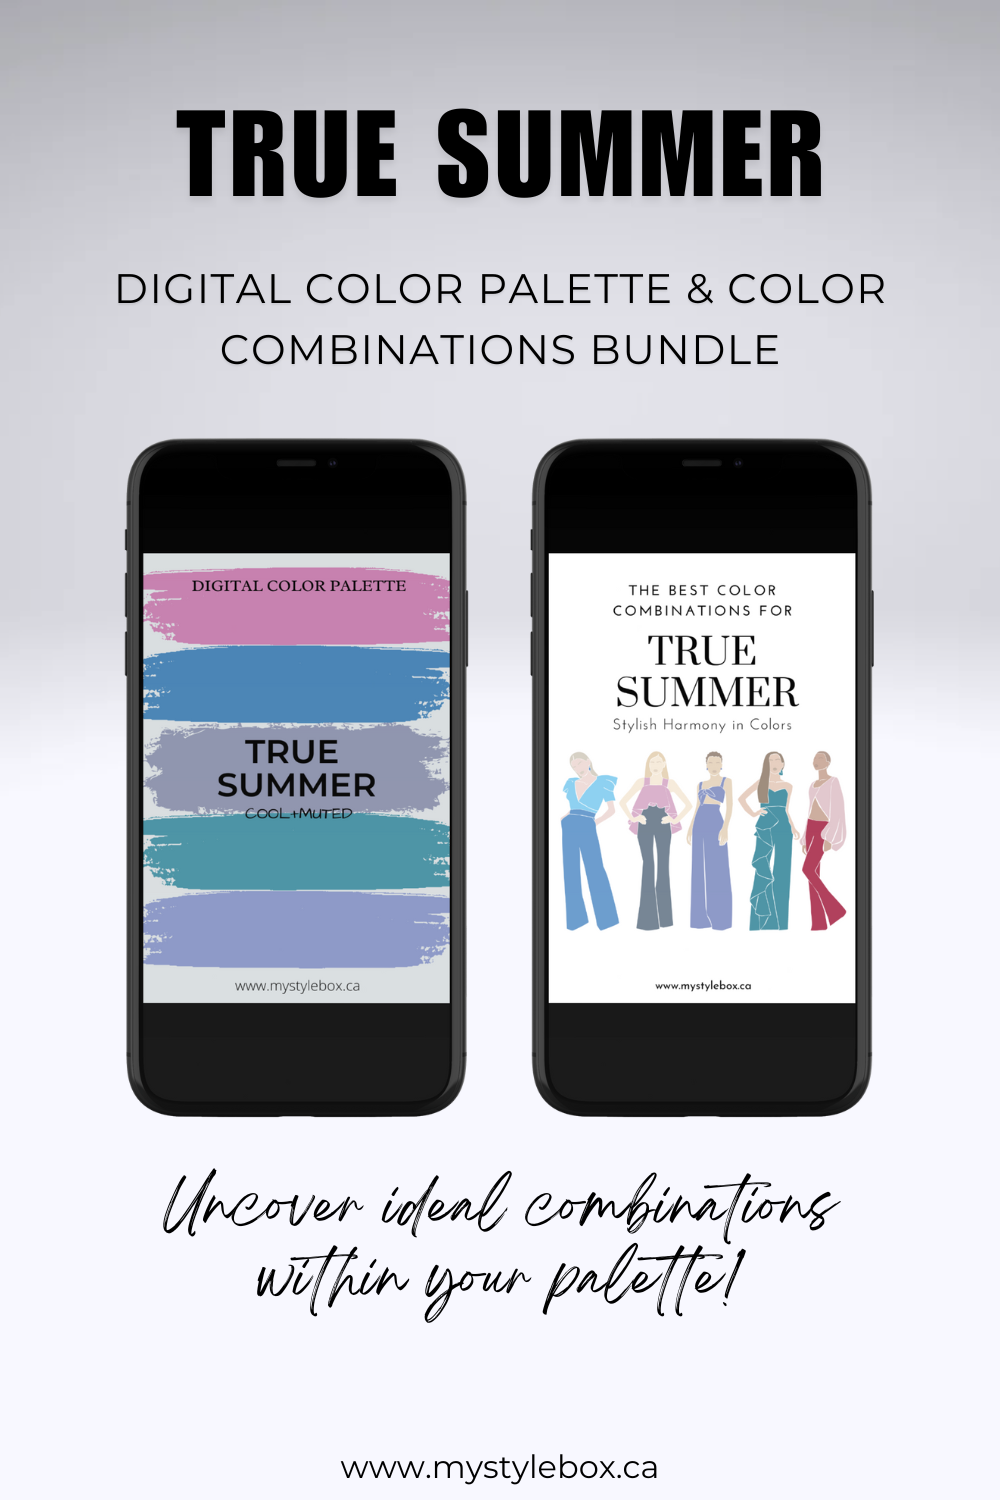 True Summer Season Digital Color Palette and Color Combinations Bundle